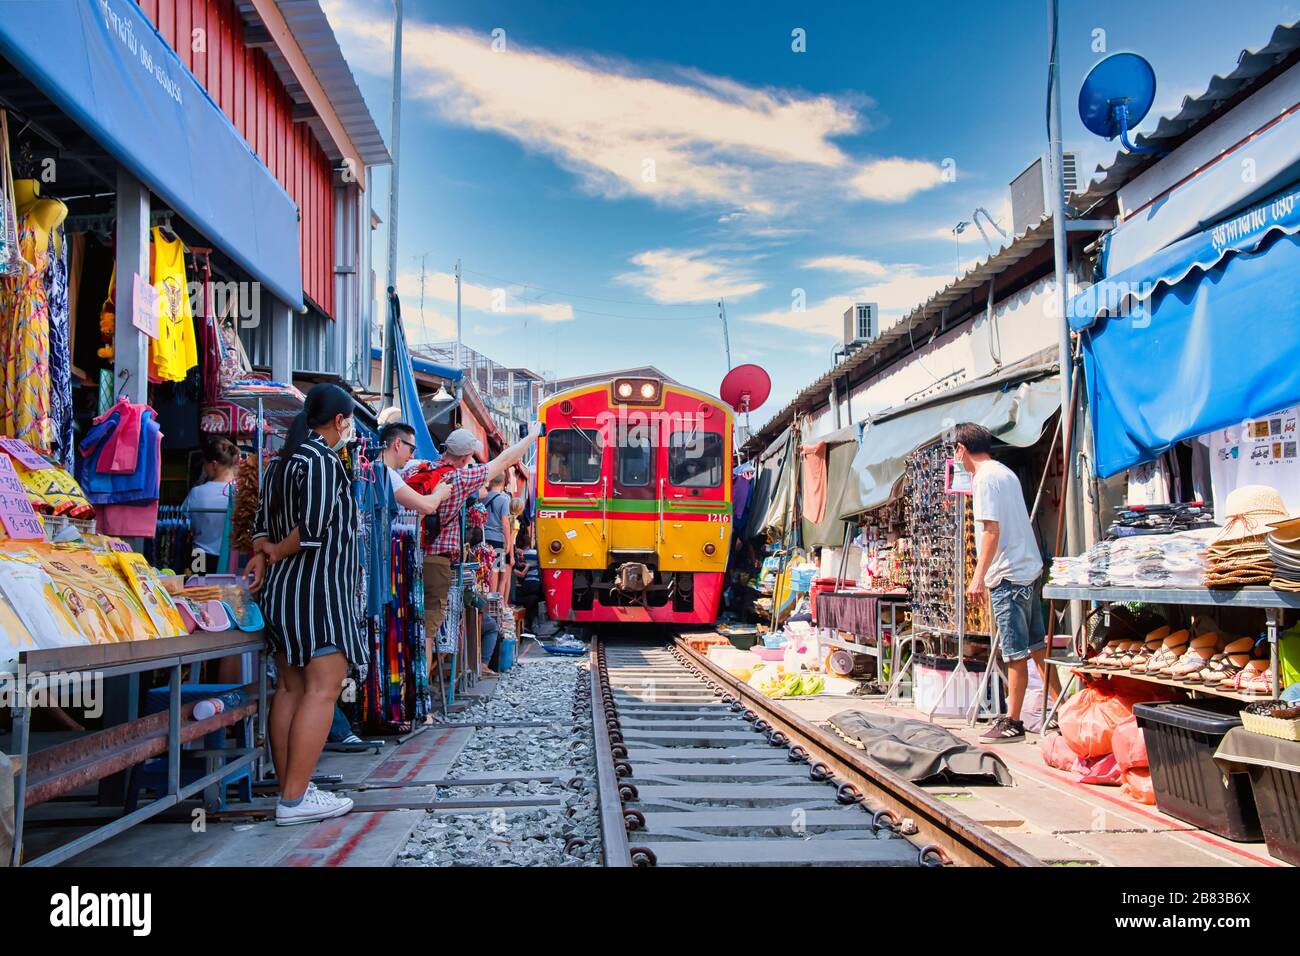 Bahn am Maeklong Train Market - Maeklong Railway Market, in der Provinz Samut Songkhram in Thailand Stockfoto